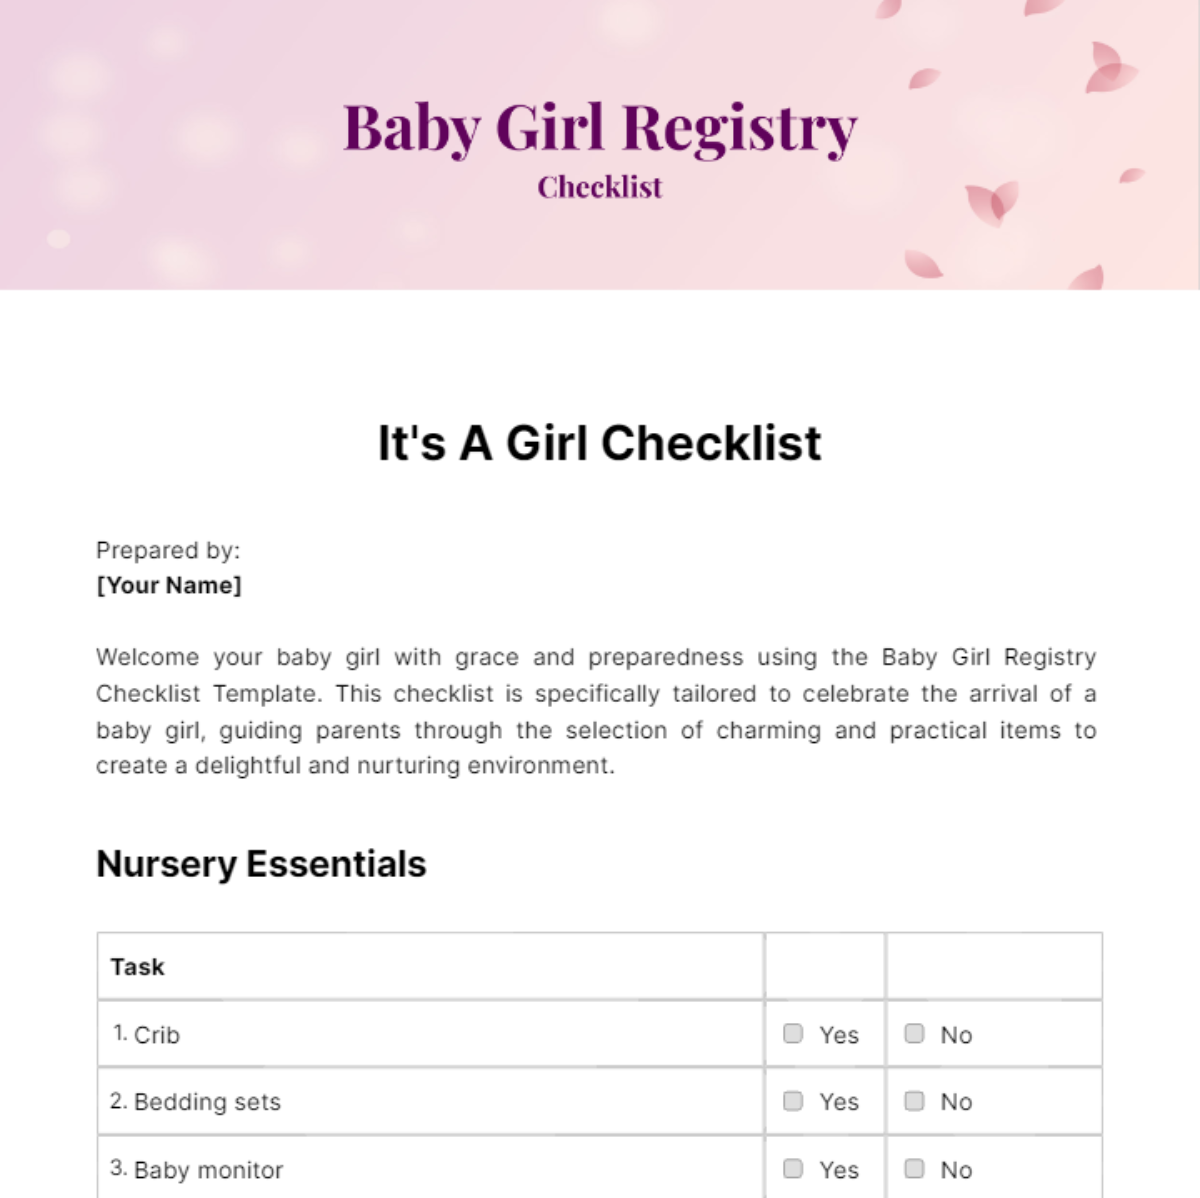 Baby Girl Registry Checklist Template